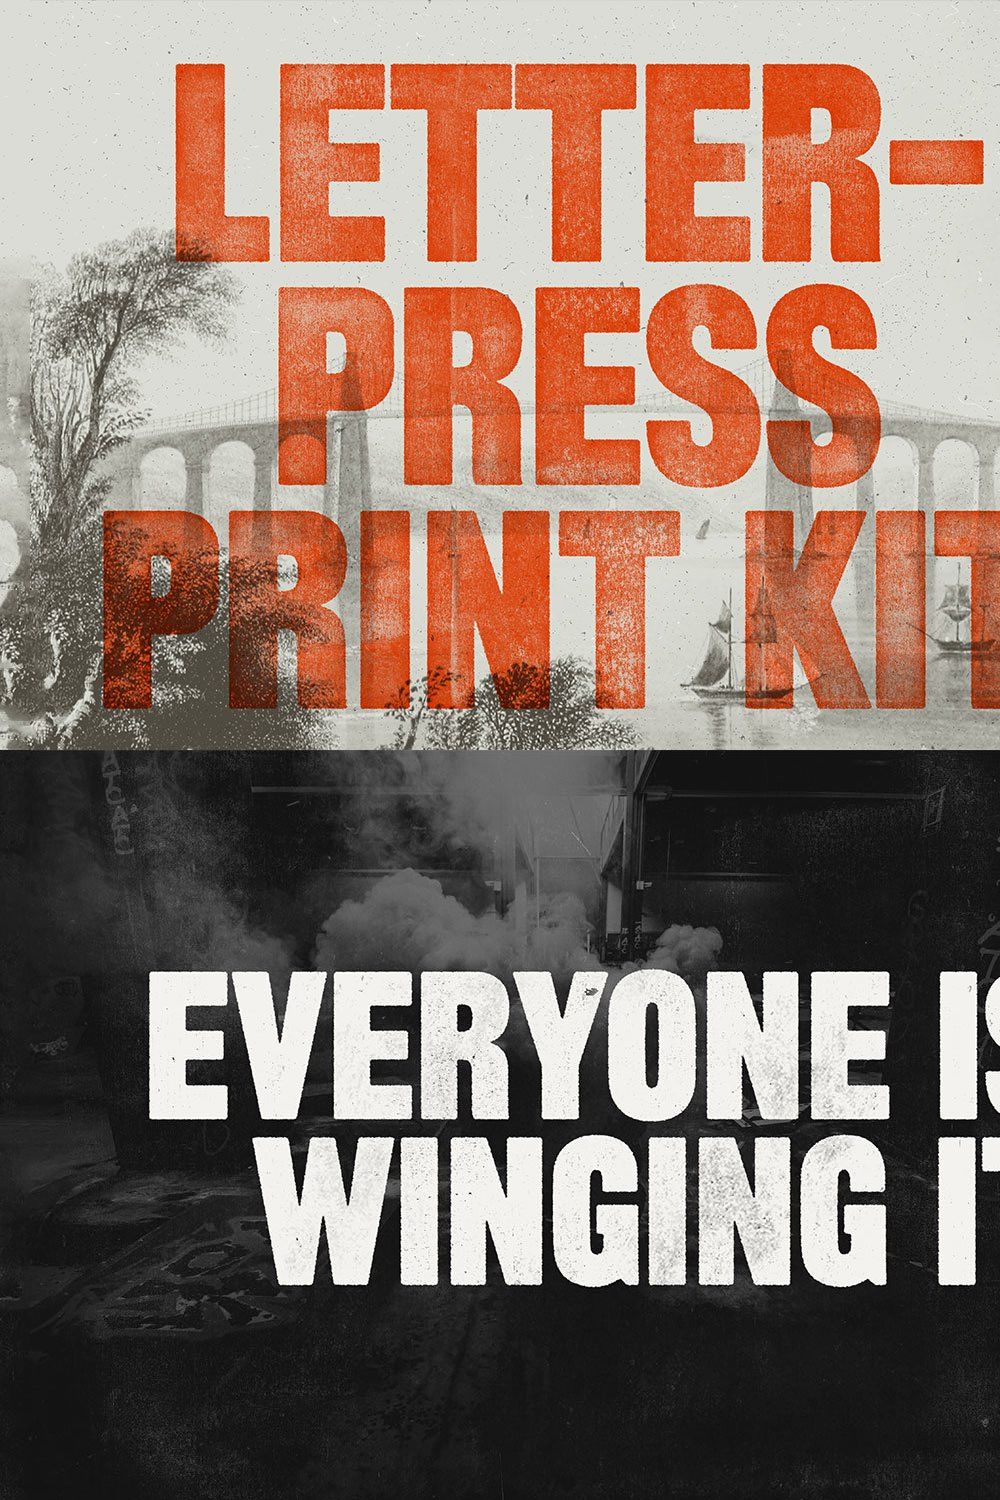 Letterpress Print Kit pinterest preview image.